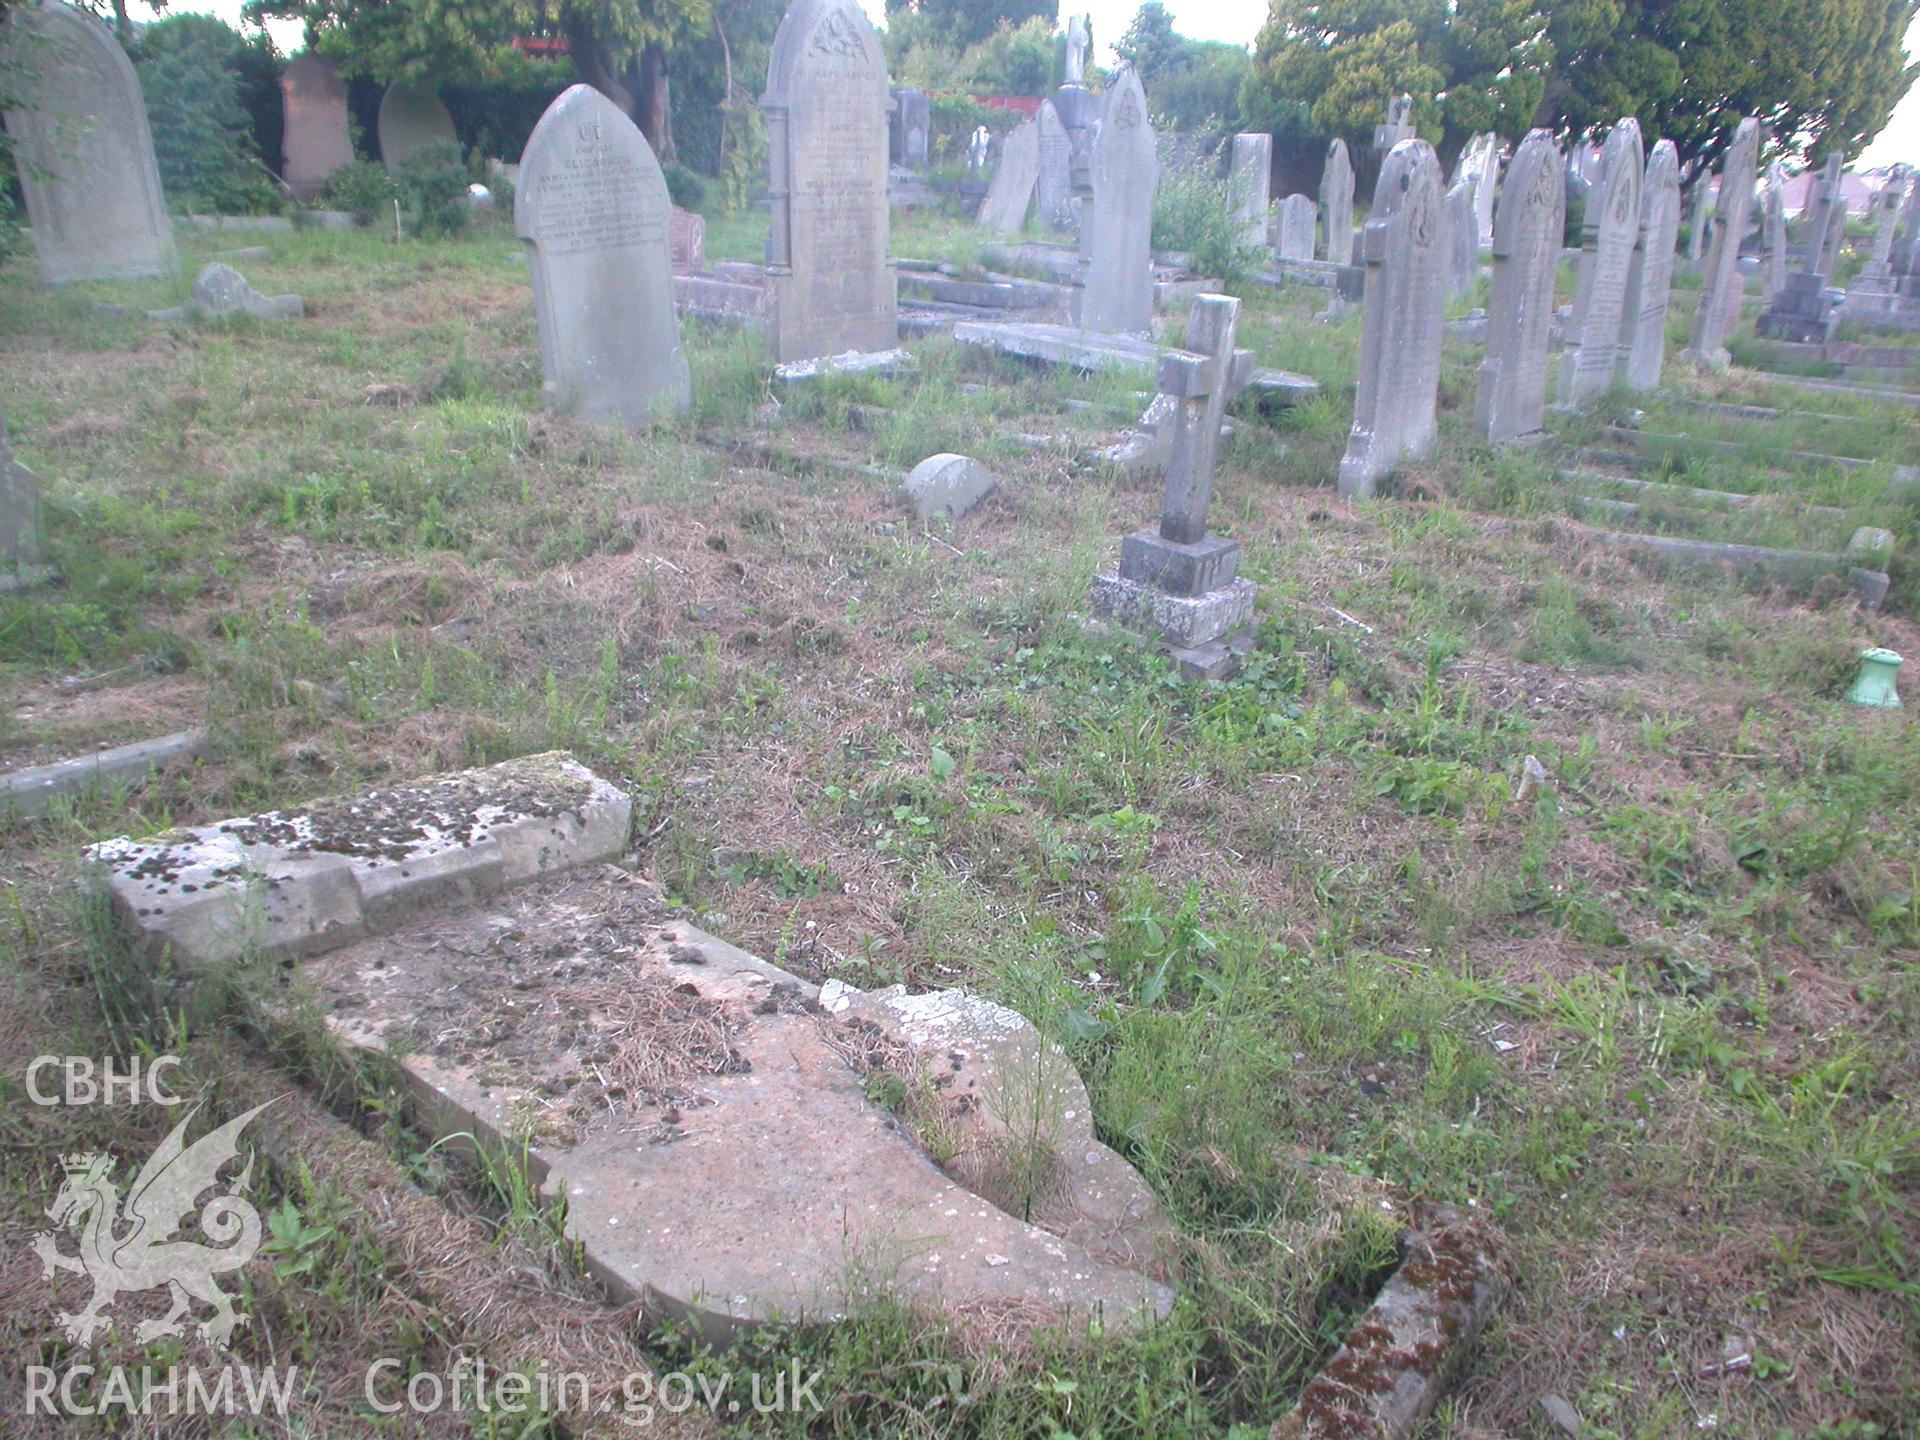 Toppled gravestone of wife of Thomas Thomas chapel architect, his grave beyond.